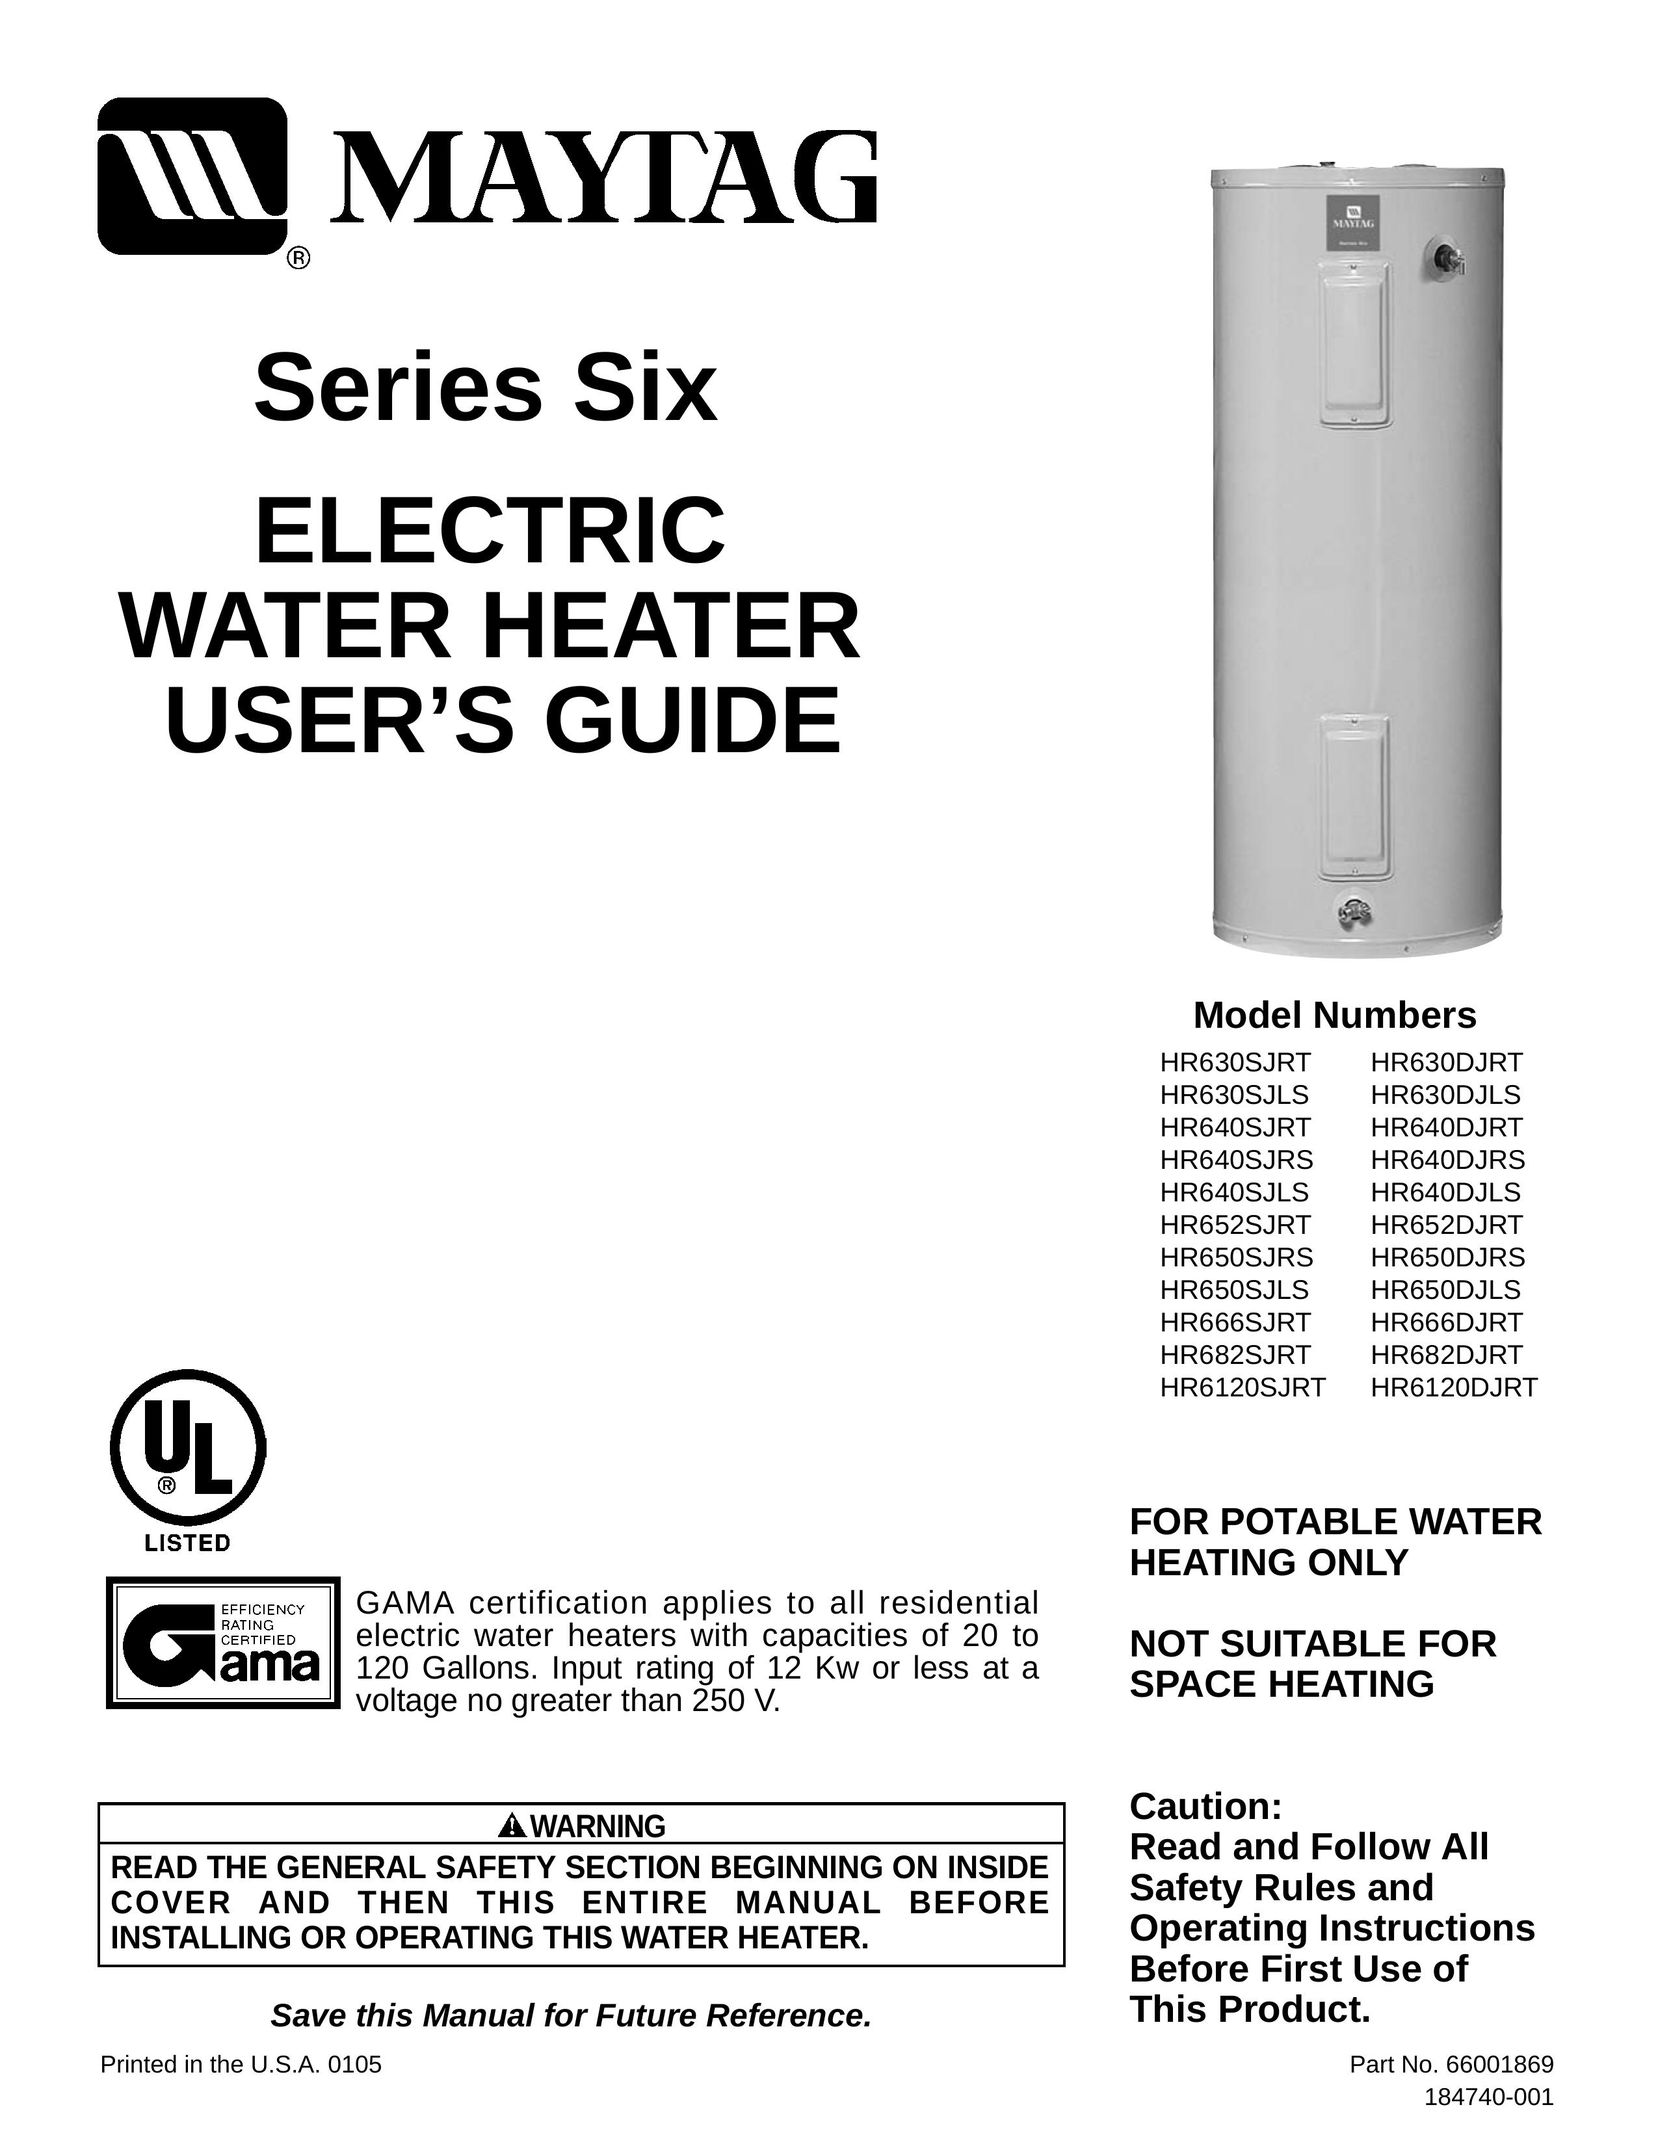 Maytag HR630DJLS Water Heater User Manual